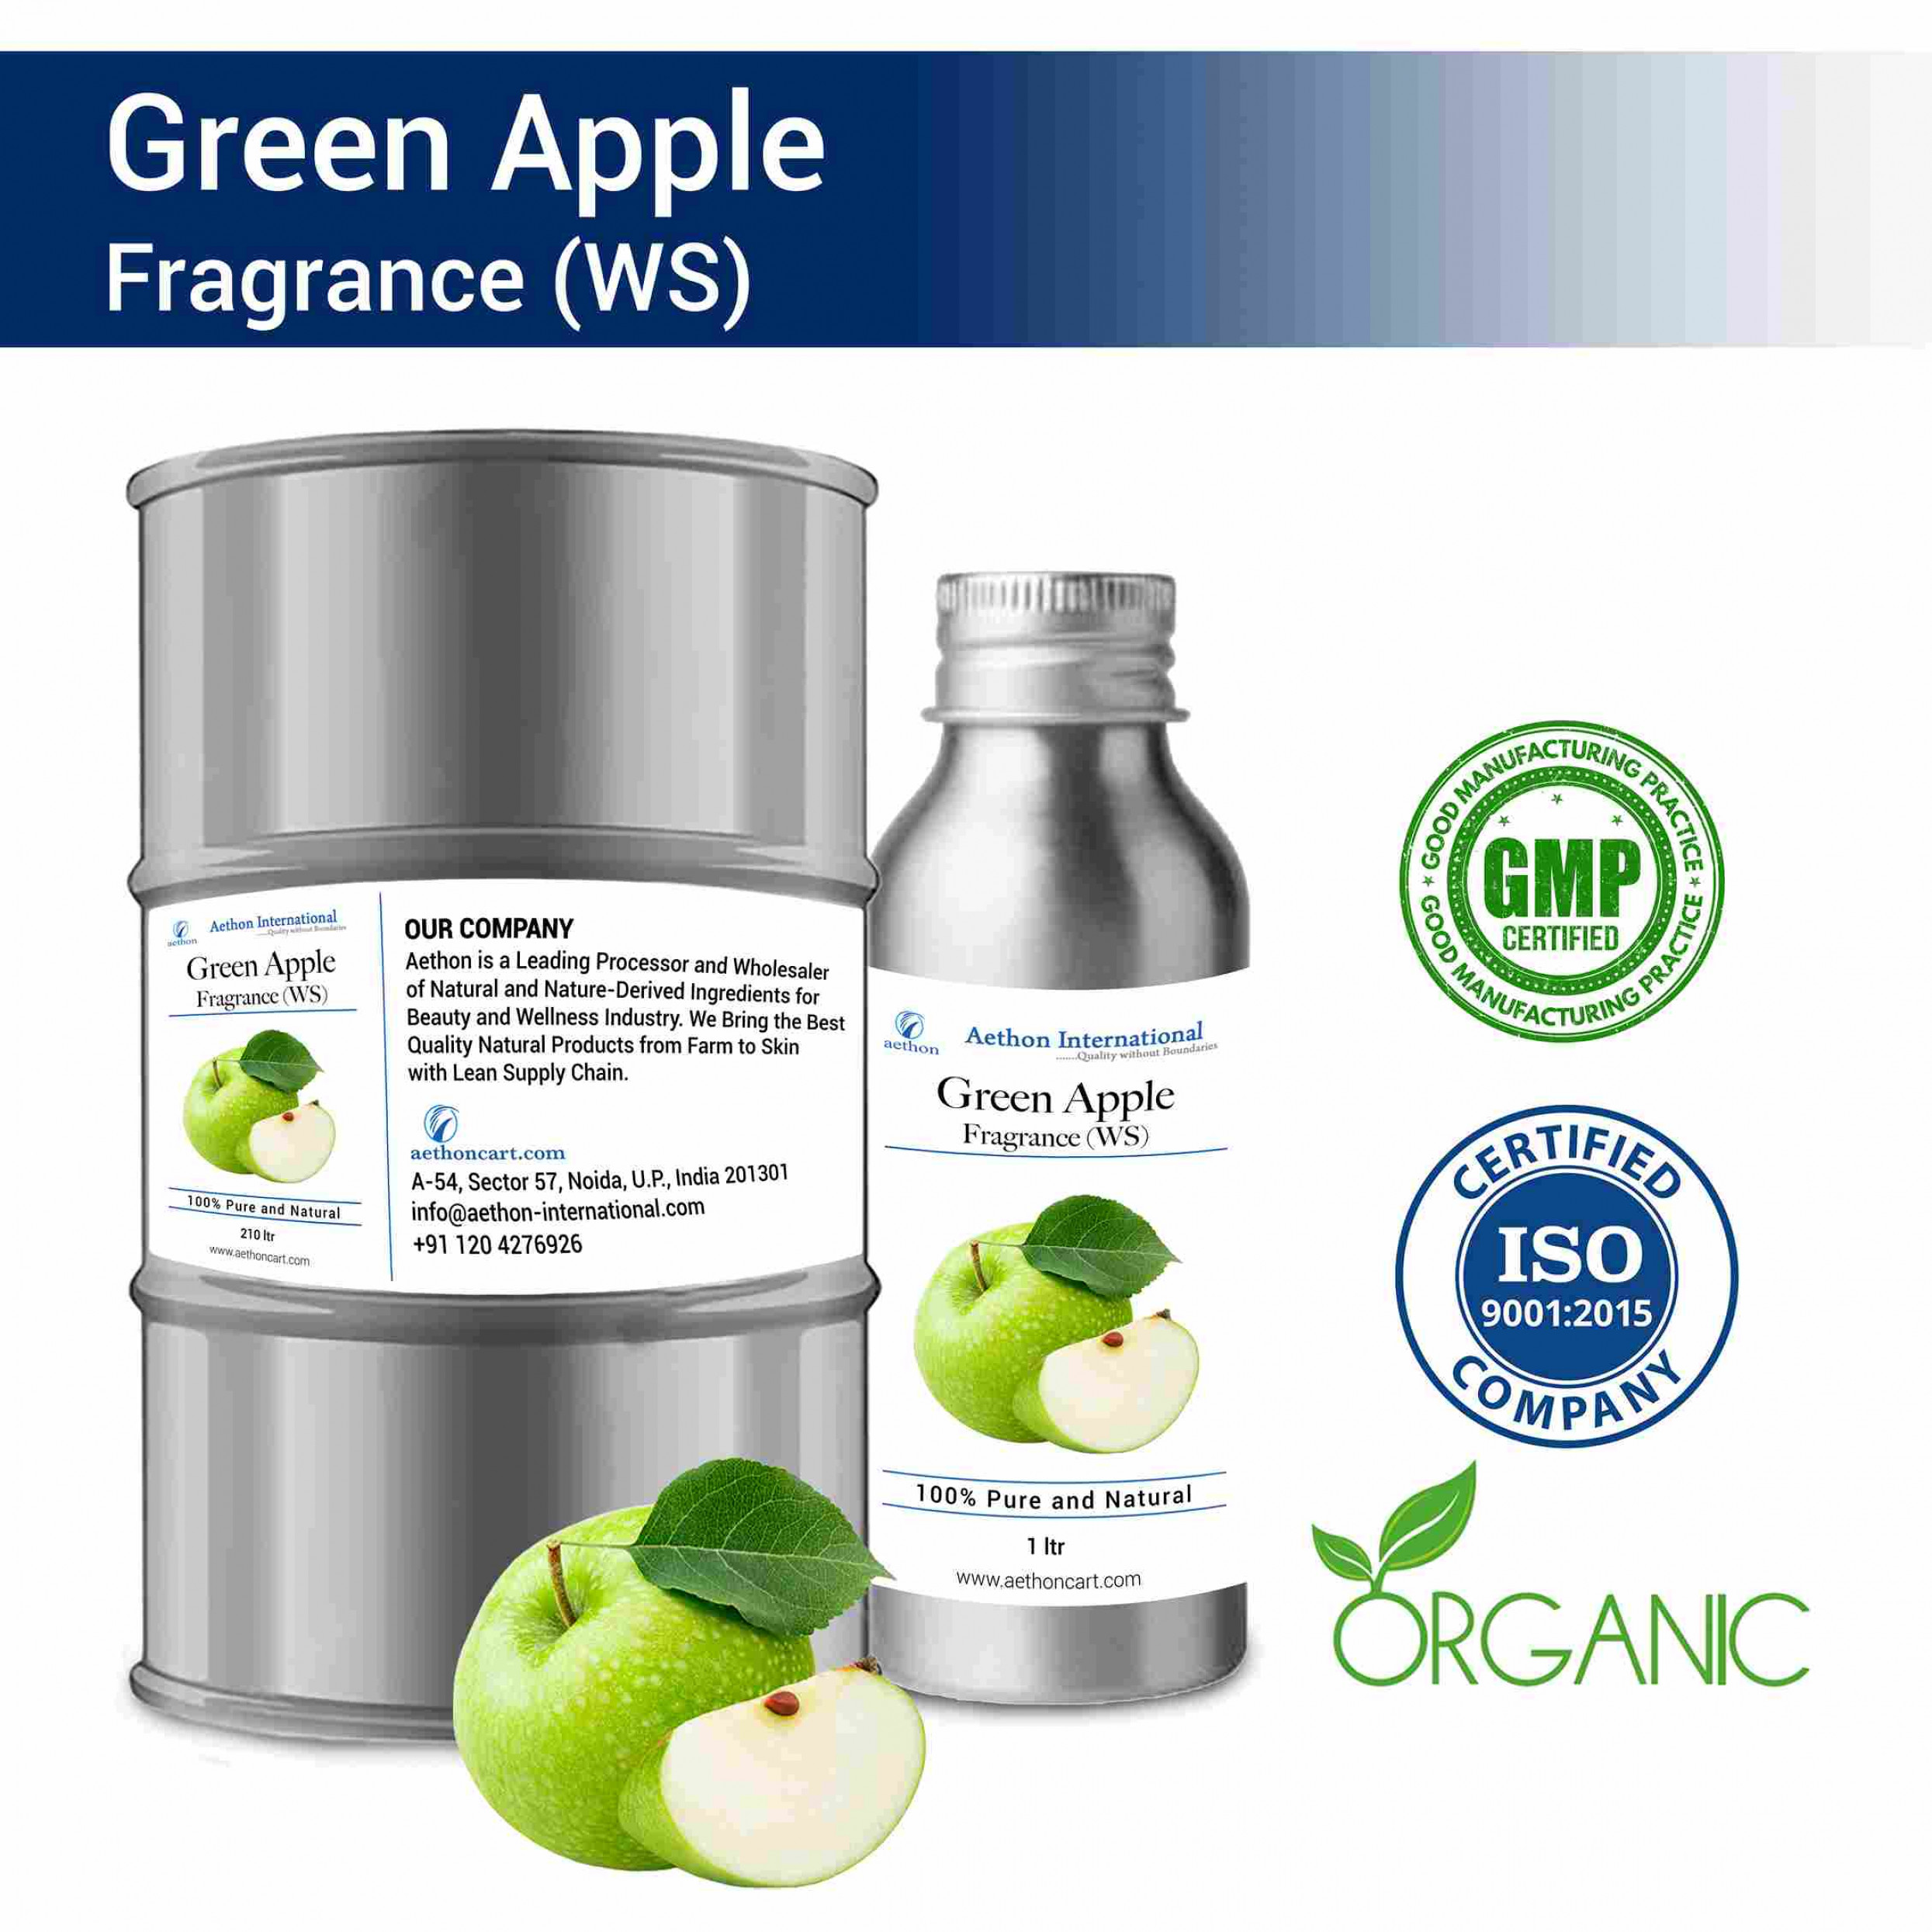 Green Apple Fragrance (WS)